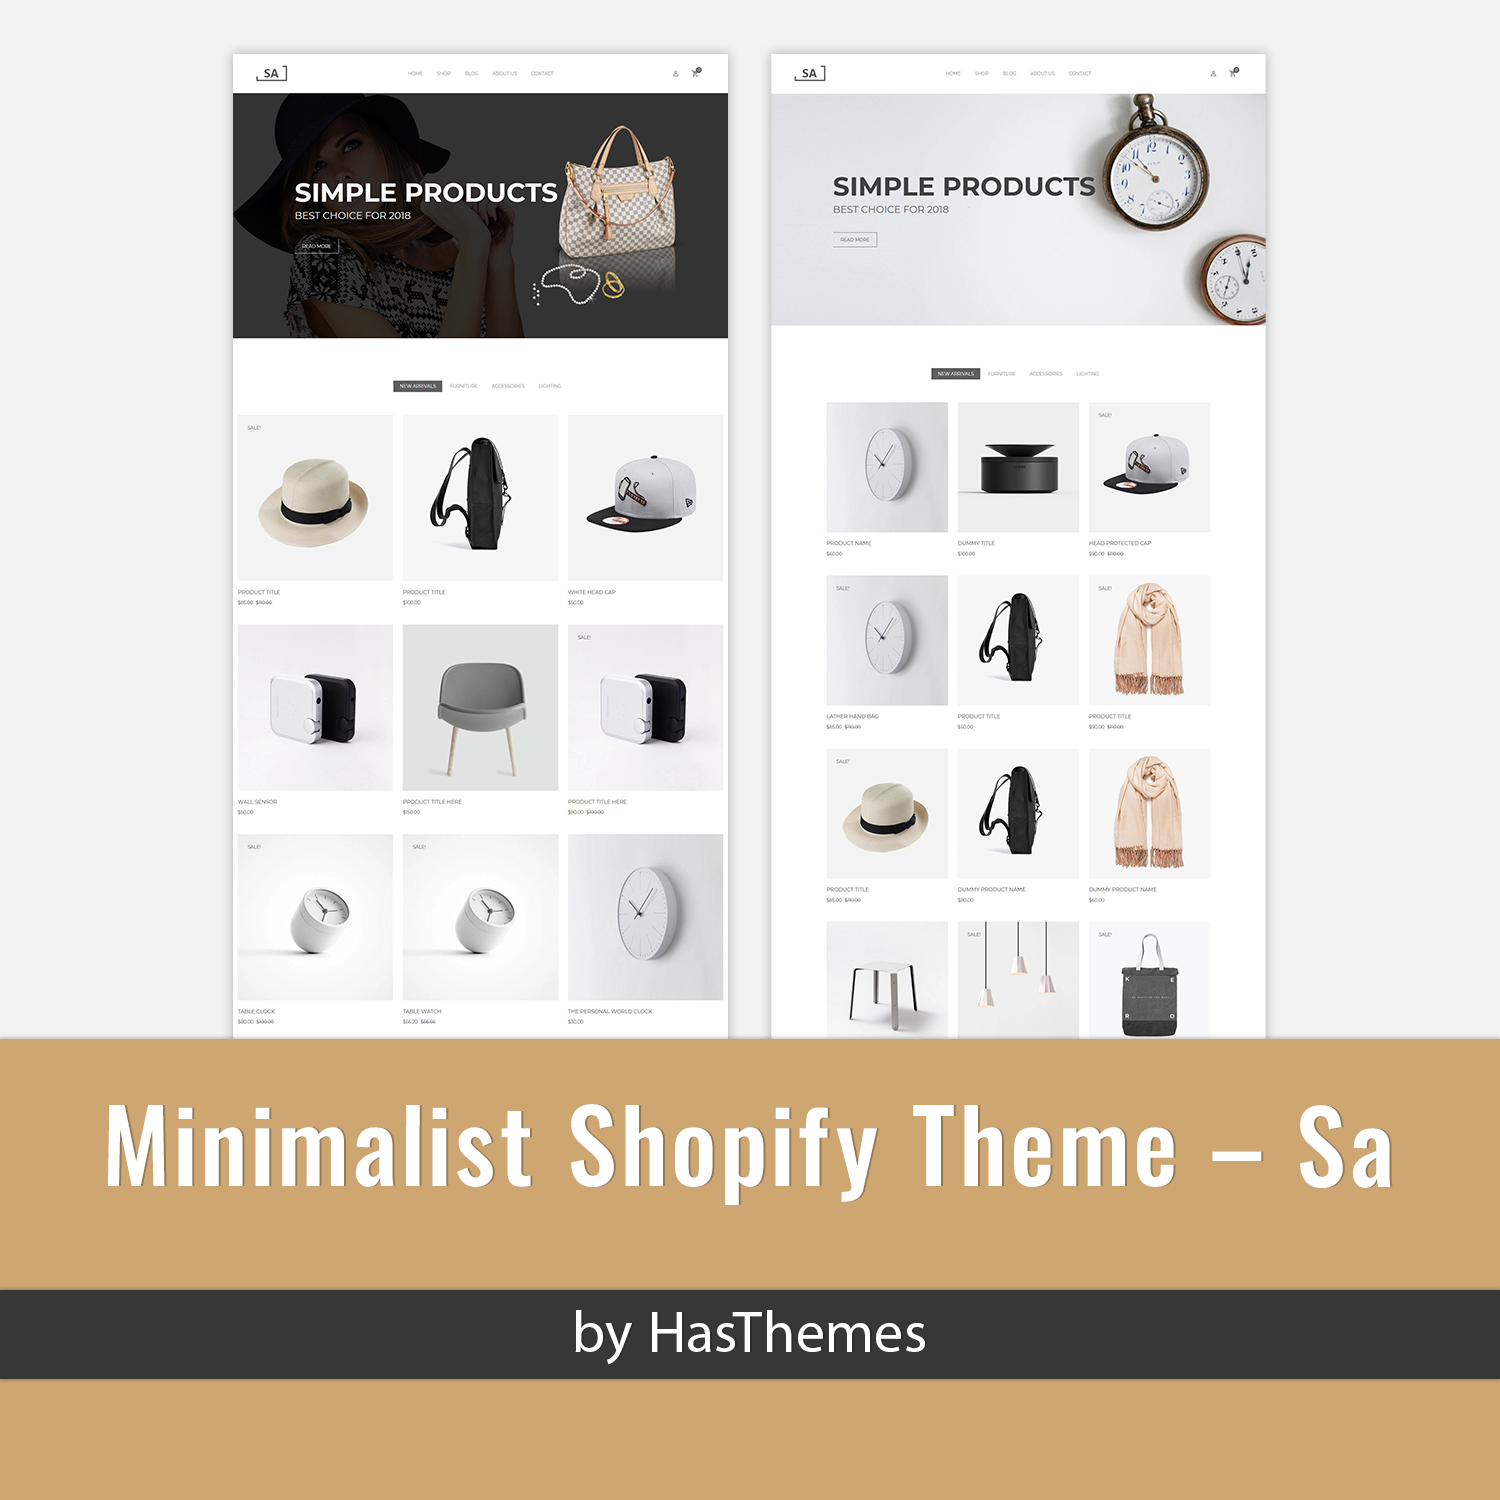 Illustration minimalist shopify theme – sa.